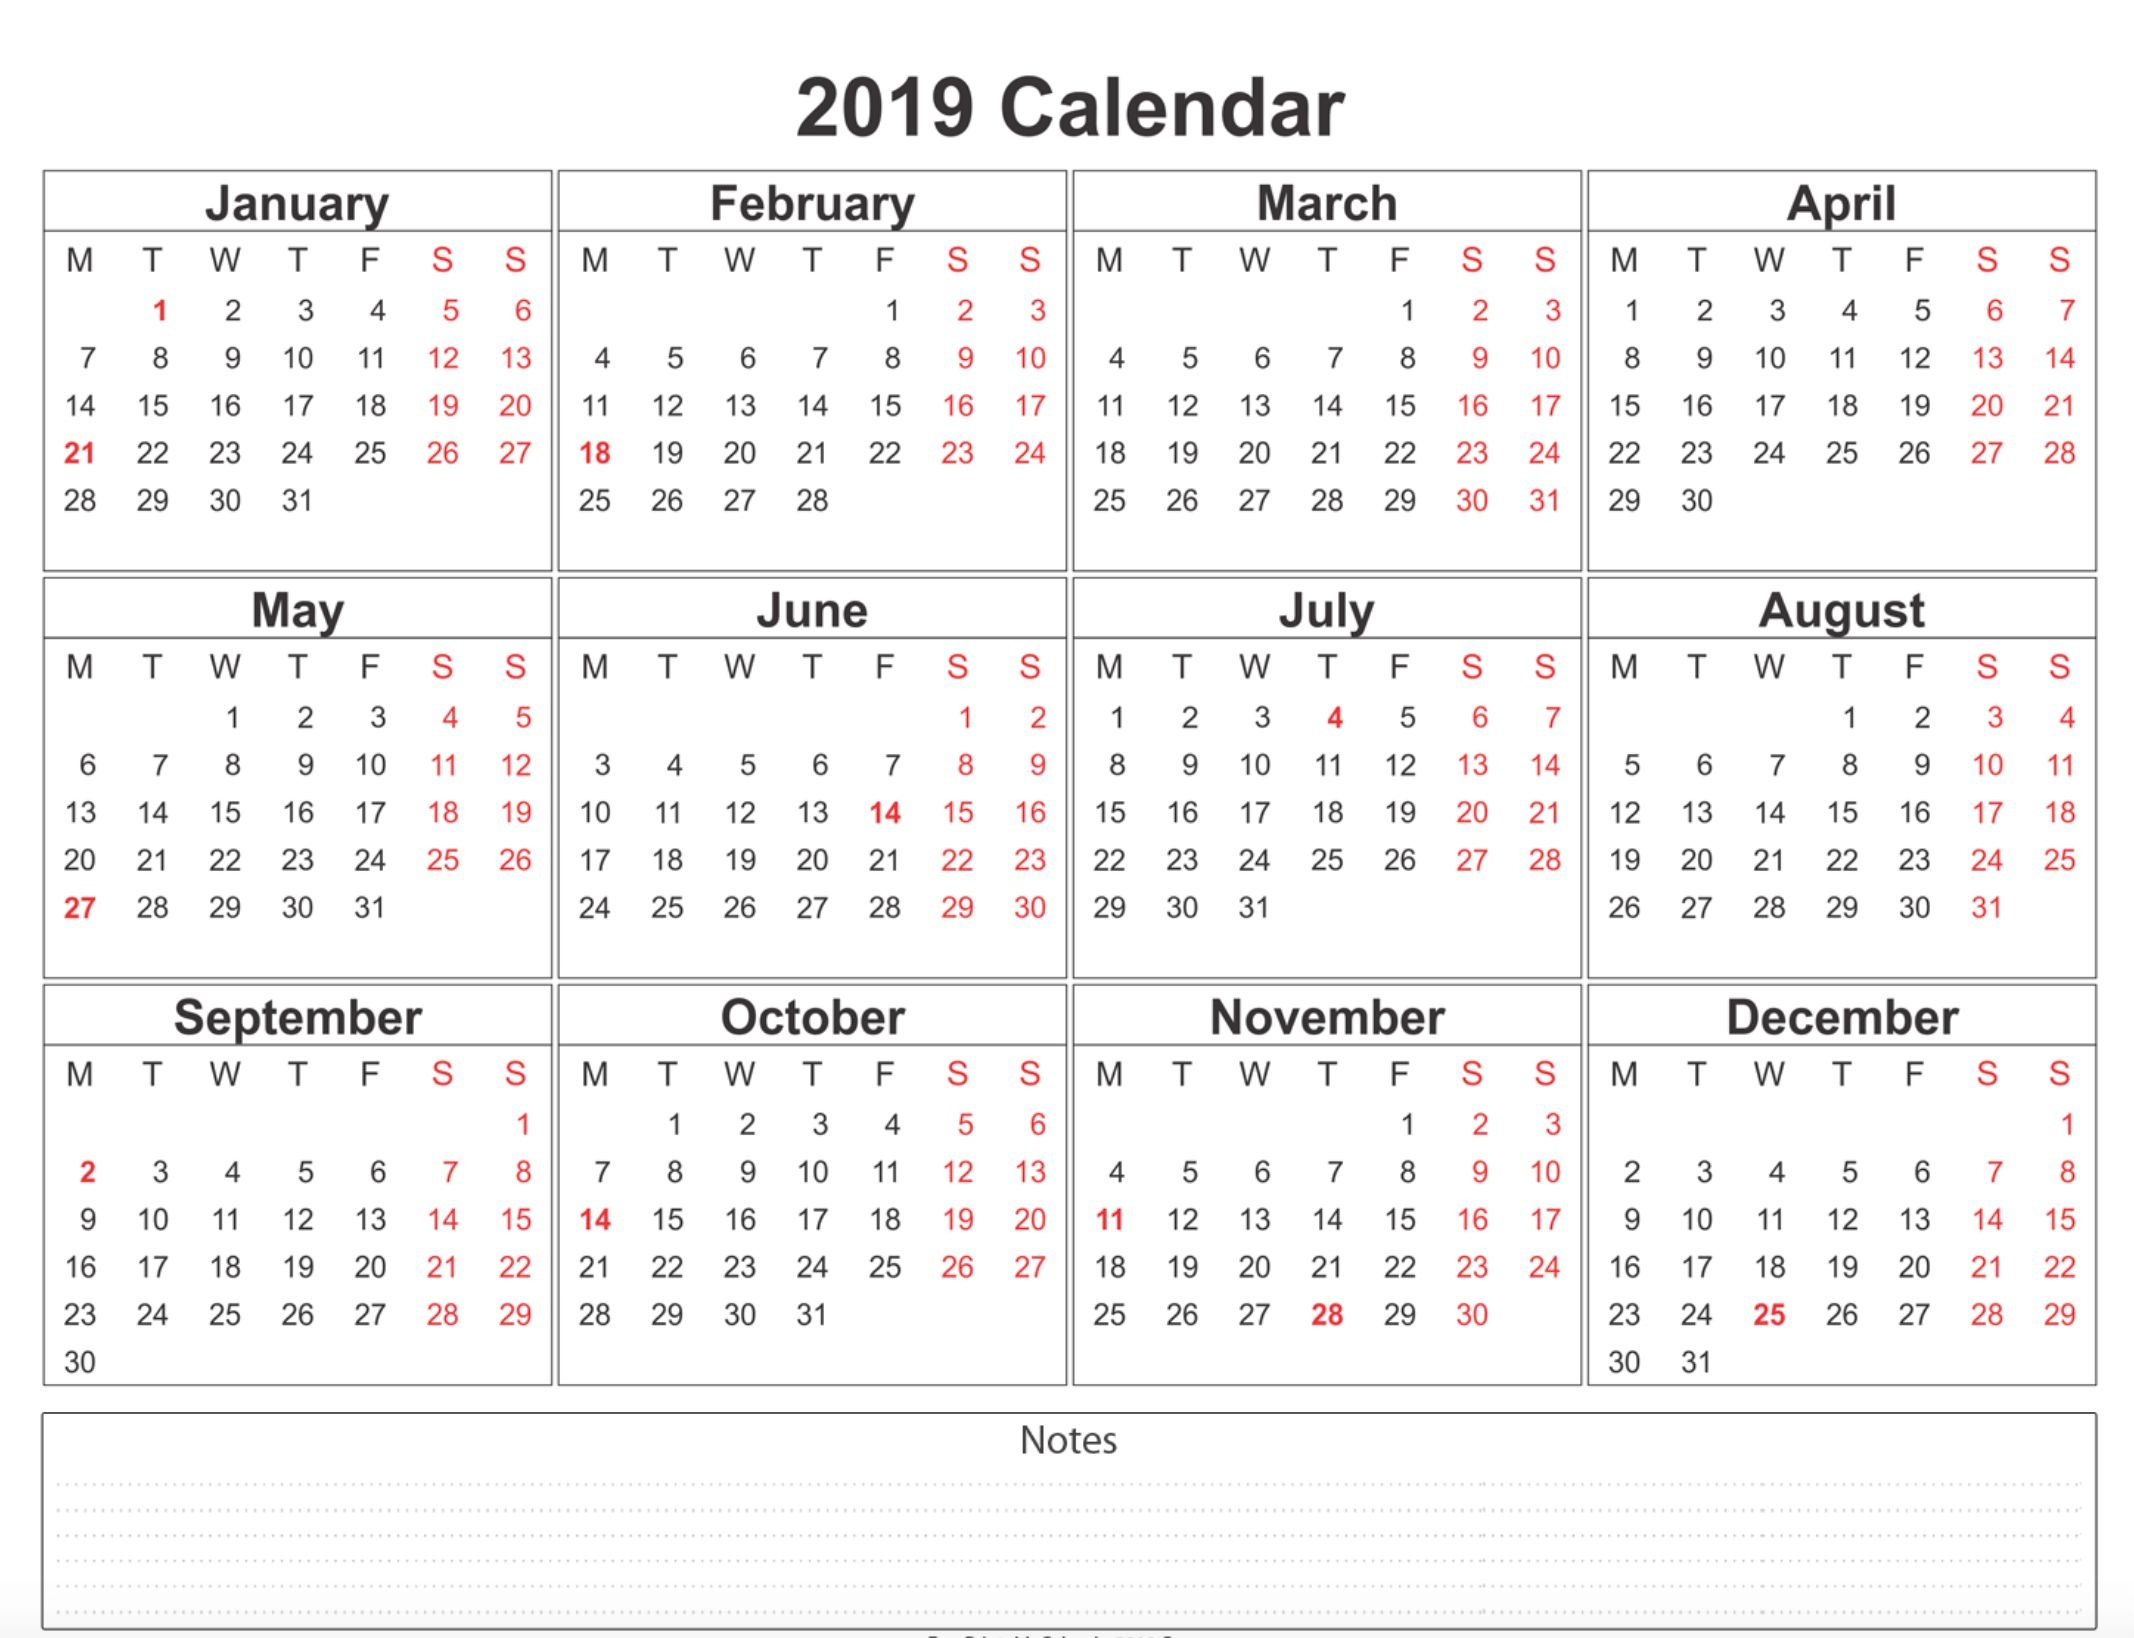 2019 Calendar Holidays Usa, India, Uk, Canada, Australia